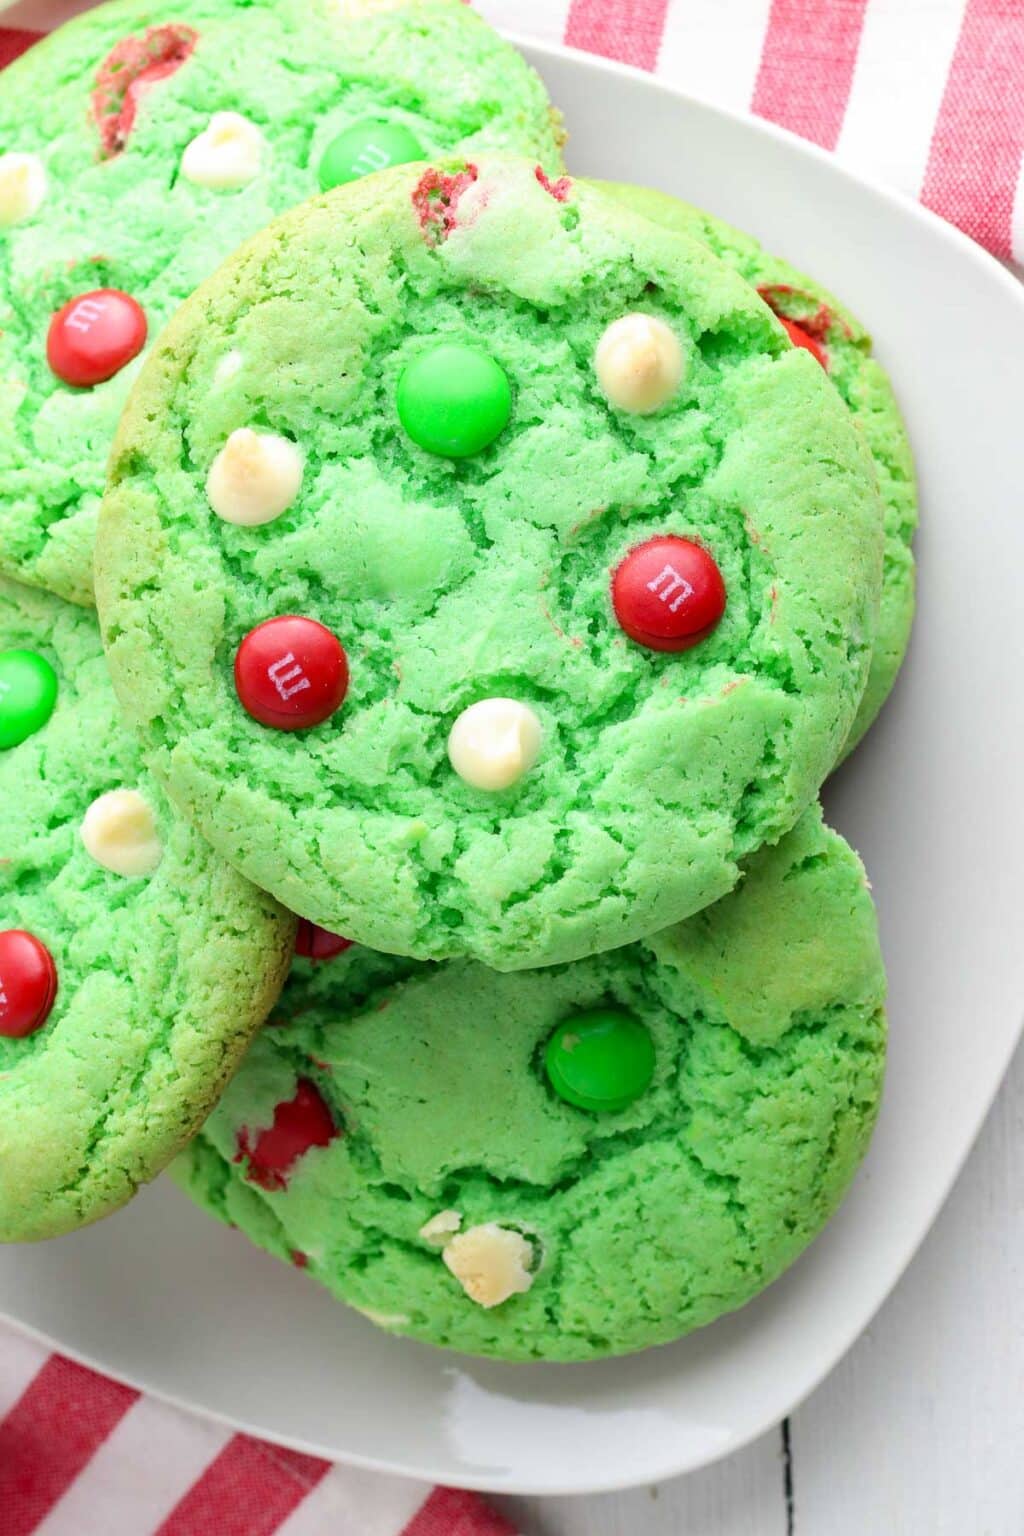 Cake Mix Cookies - an easy Christmas cookies recipe